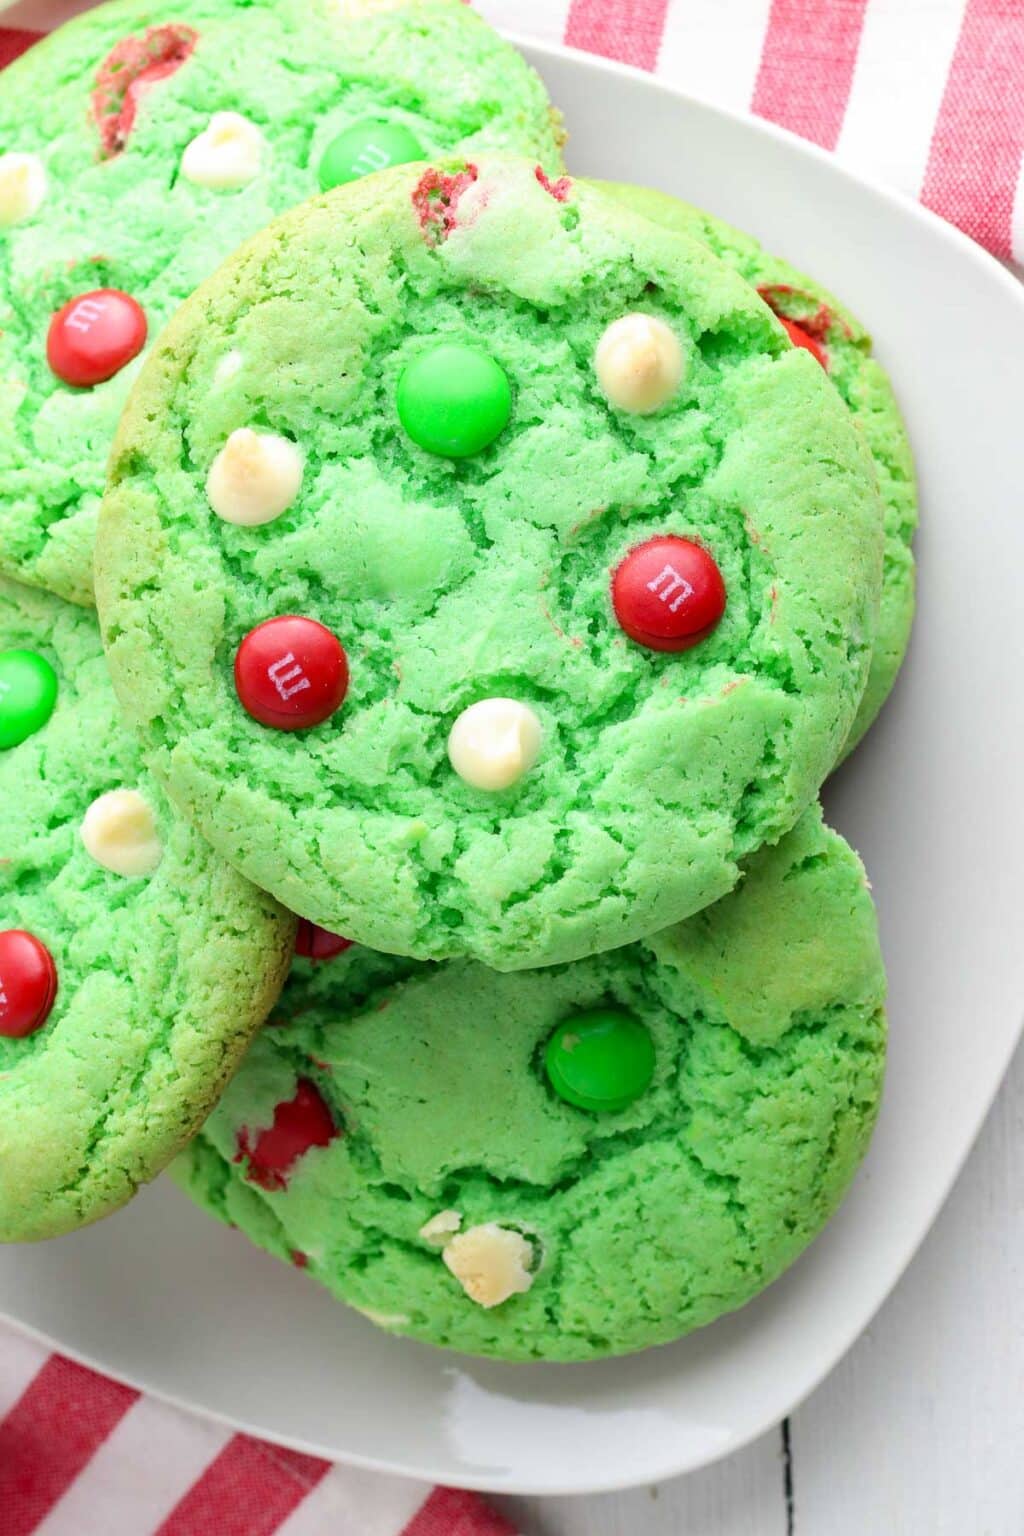 Cake Mix Cookies - an easy Christmas cookies recipe